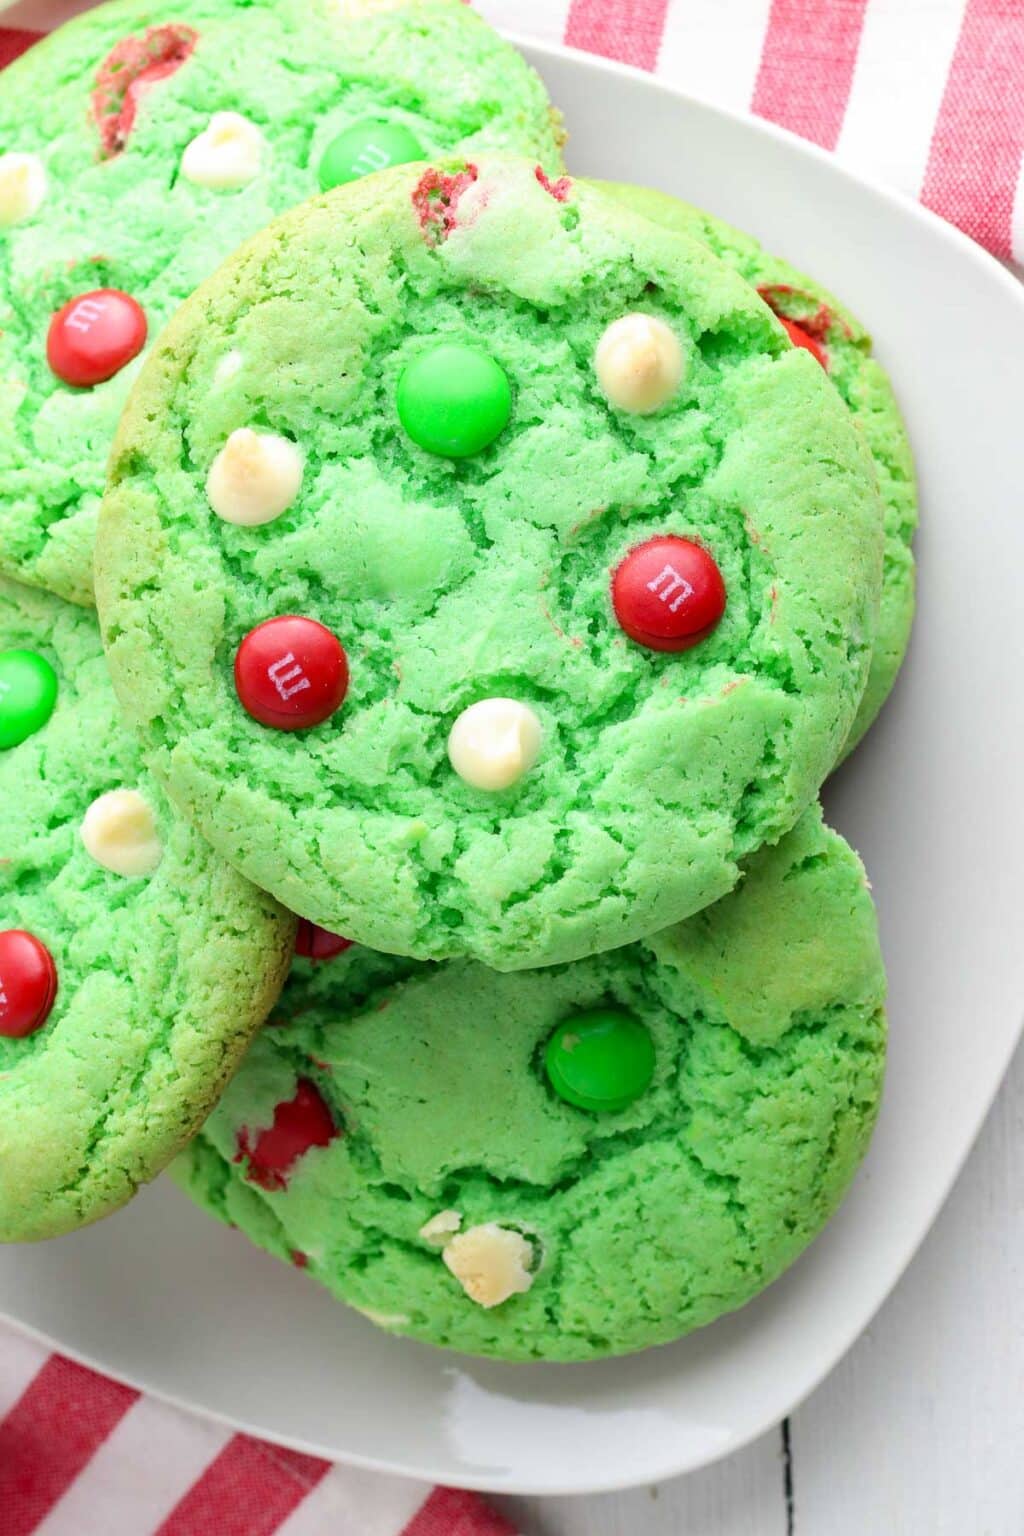 Cake Mix Cookies - an easy Christmas cookies recipe